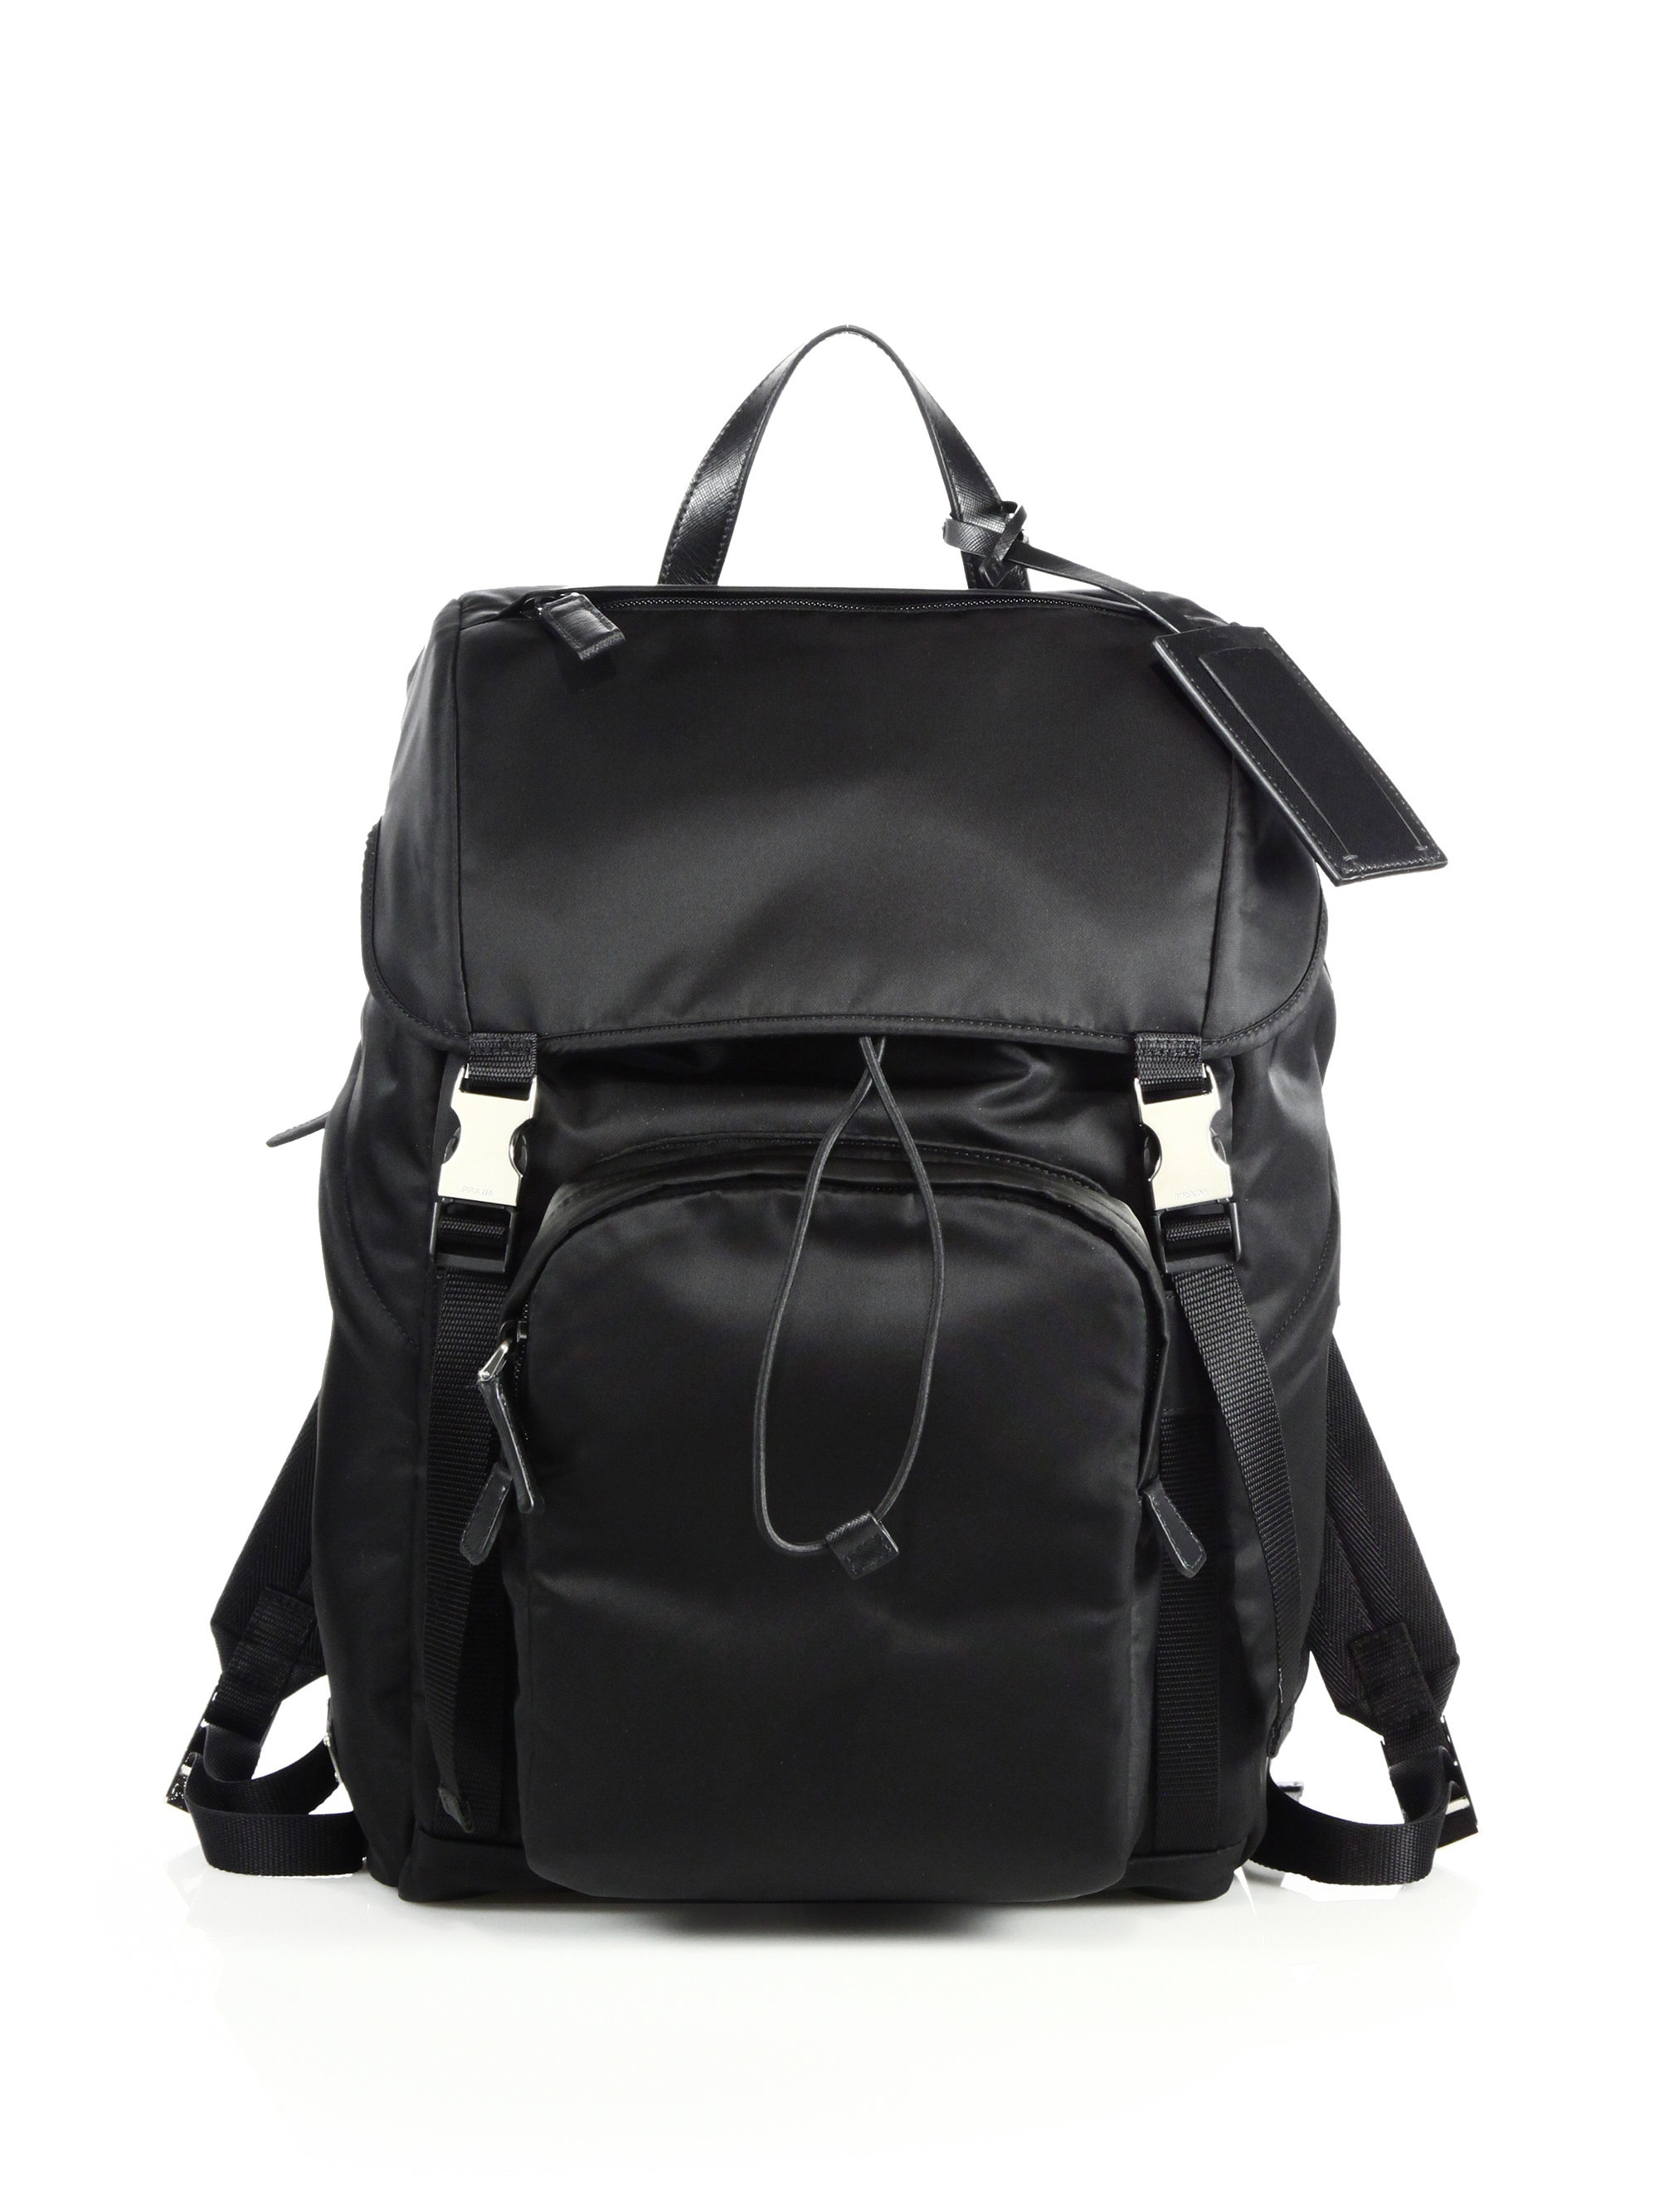 Lyst - Prada Leather Trim Backpack in Black for Men